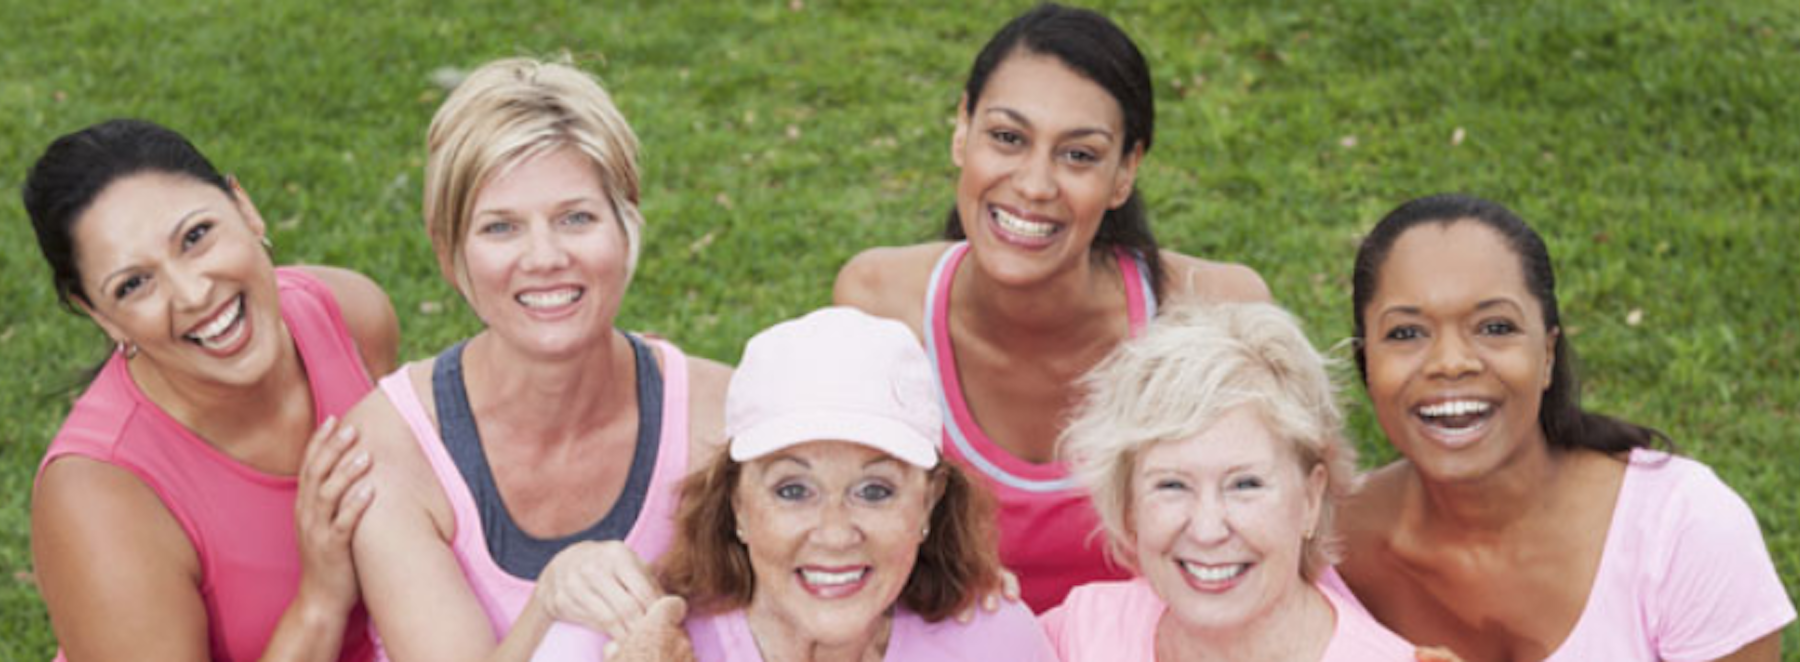 Women In Pink Active Wear